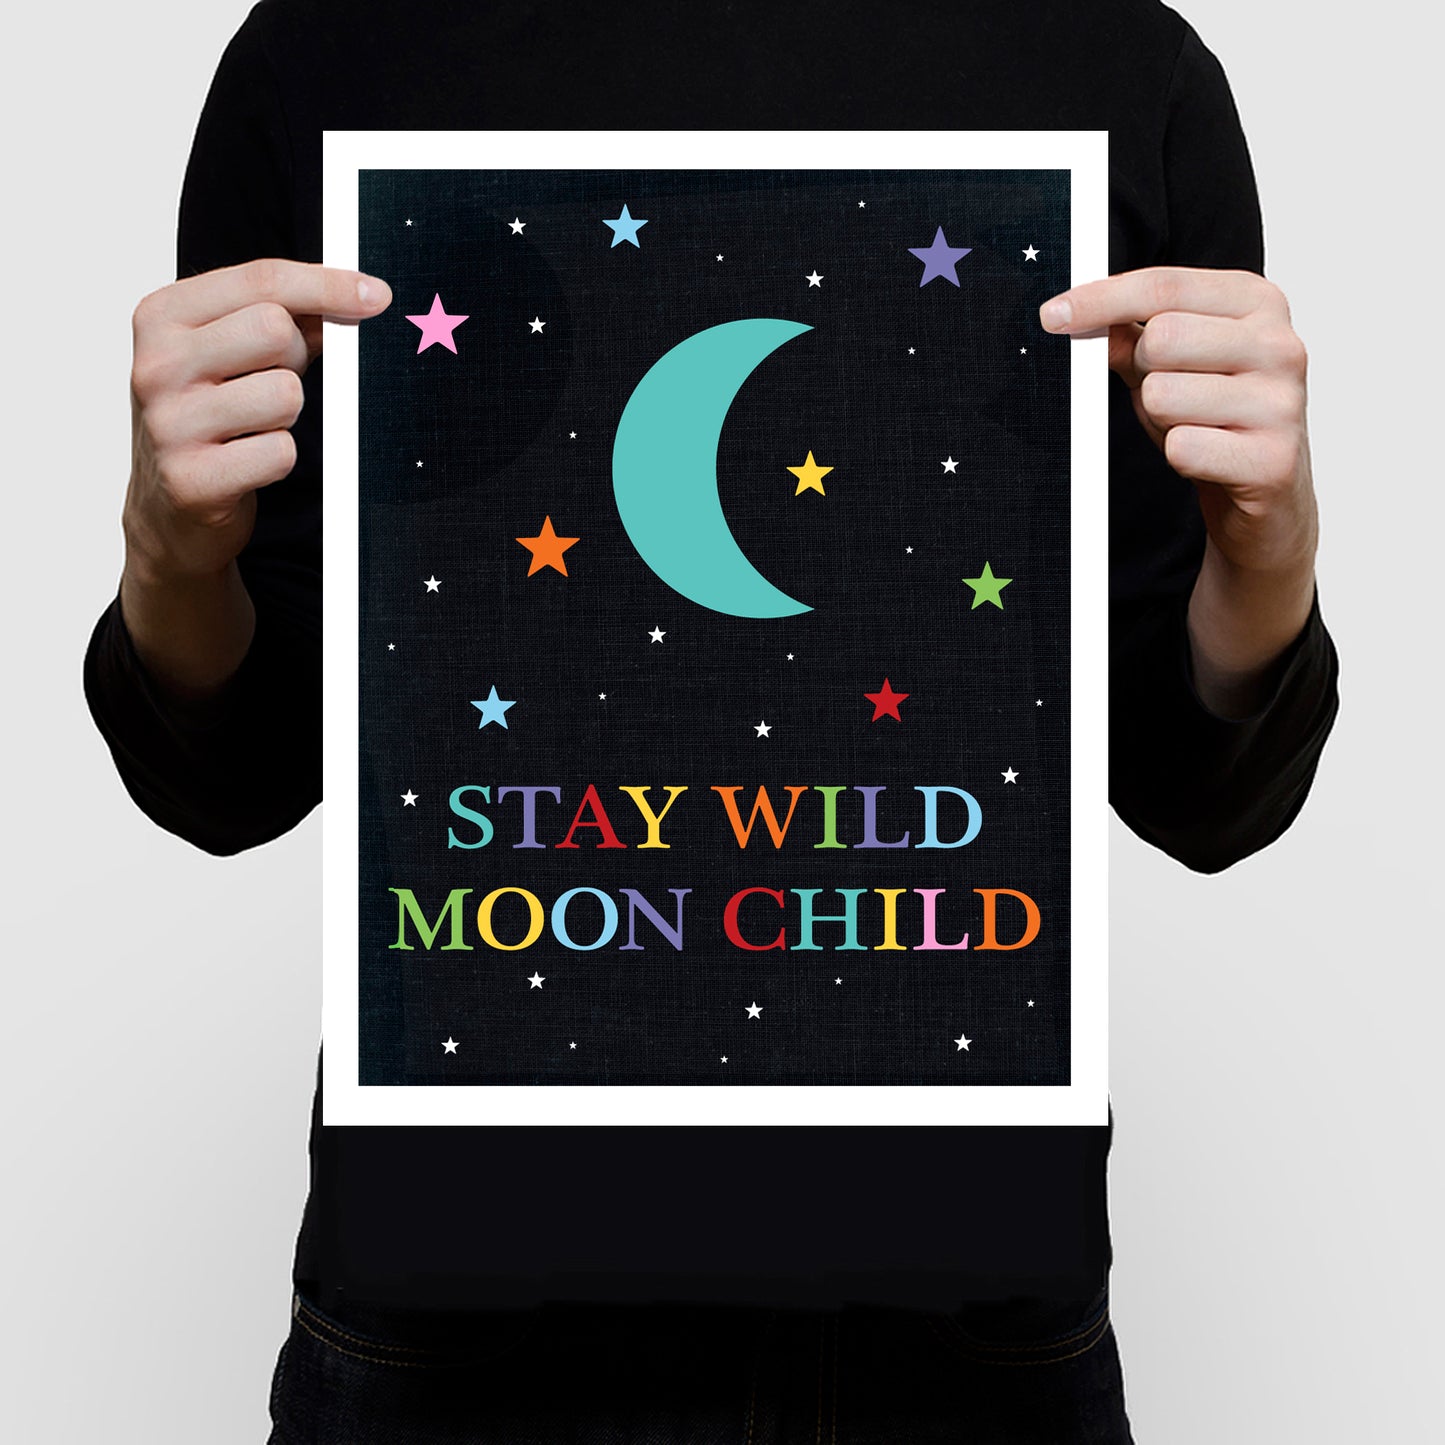 Stay wild moon child print